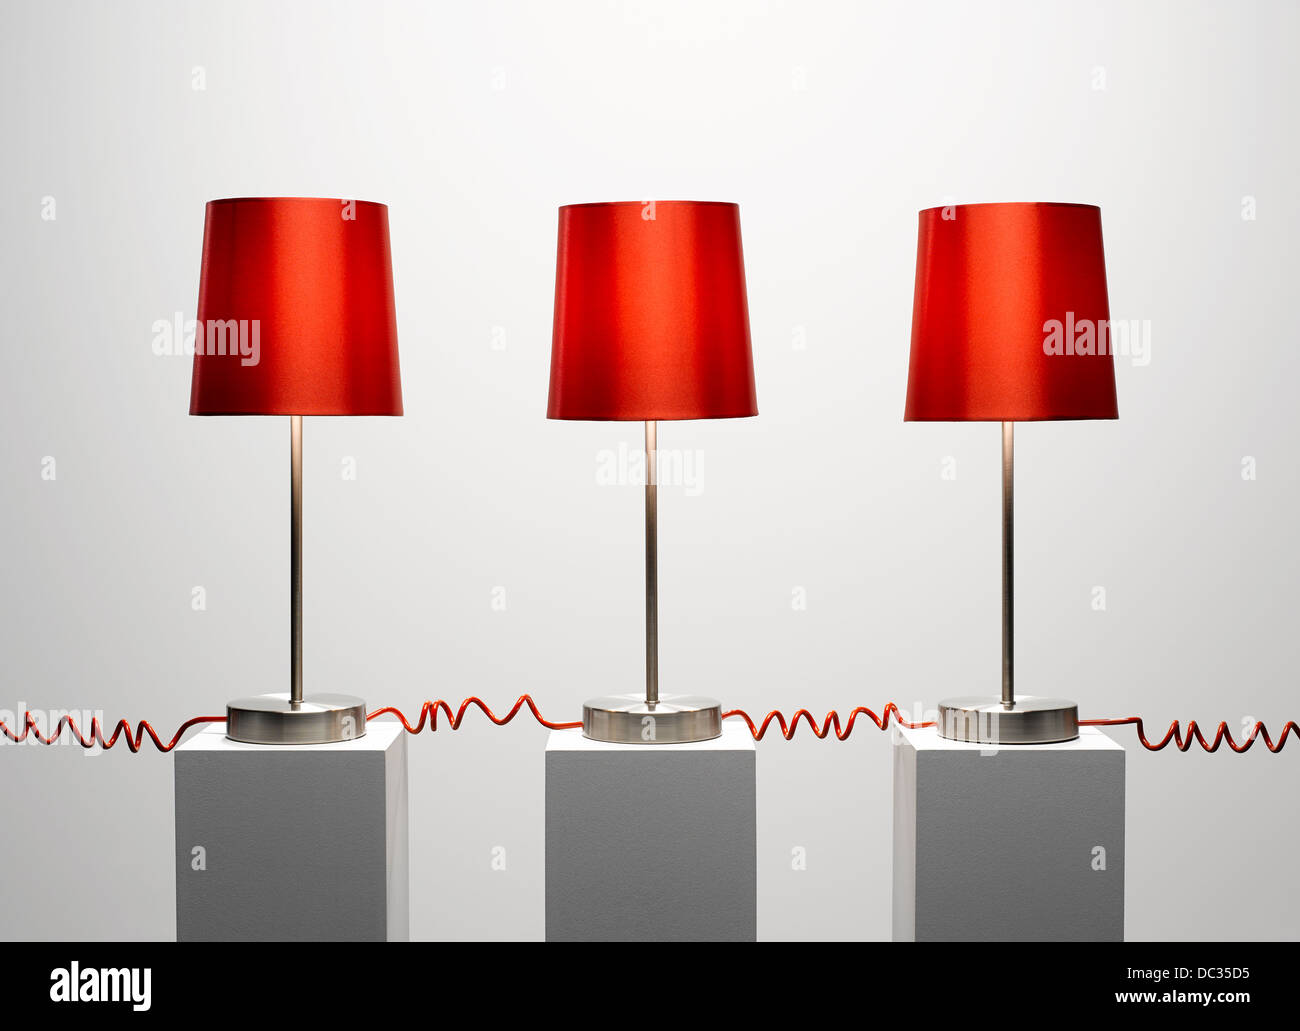 Roten Lampen durch rote Kabel verbunden Stockfoto